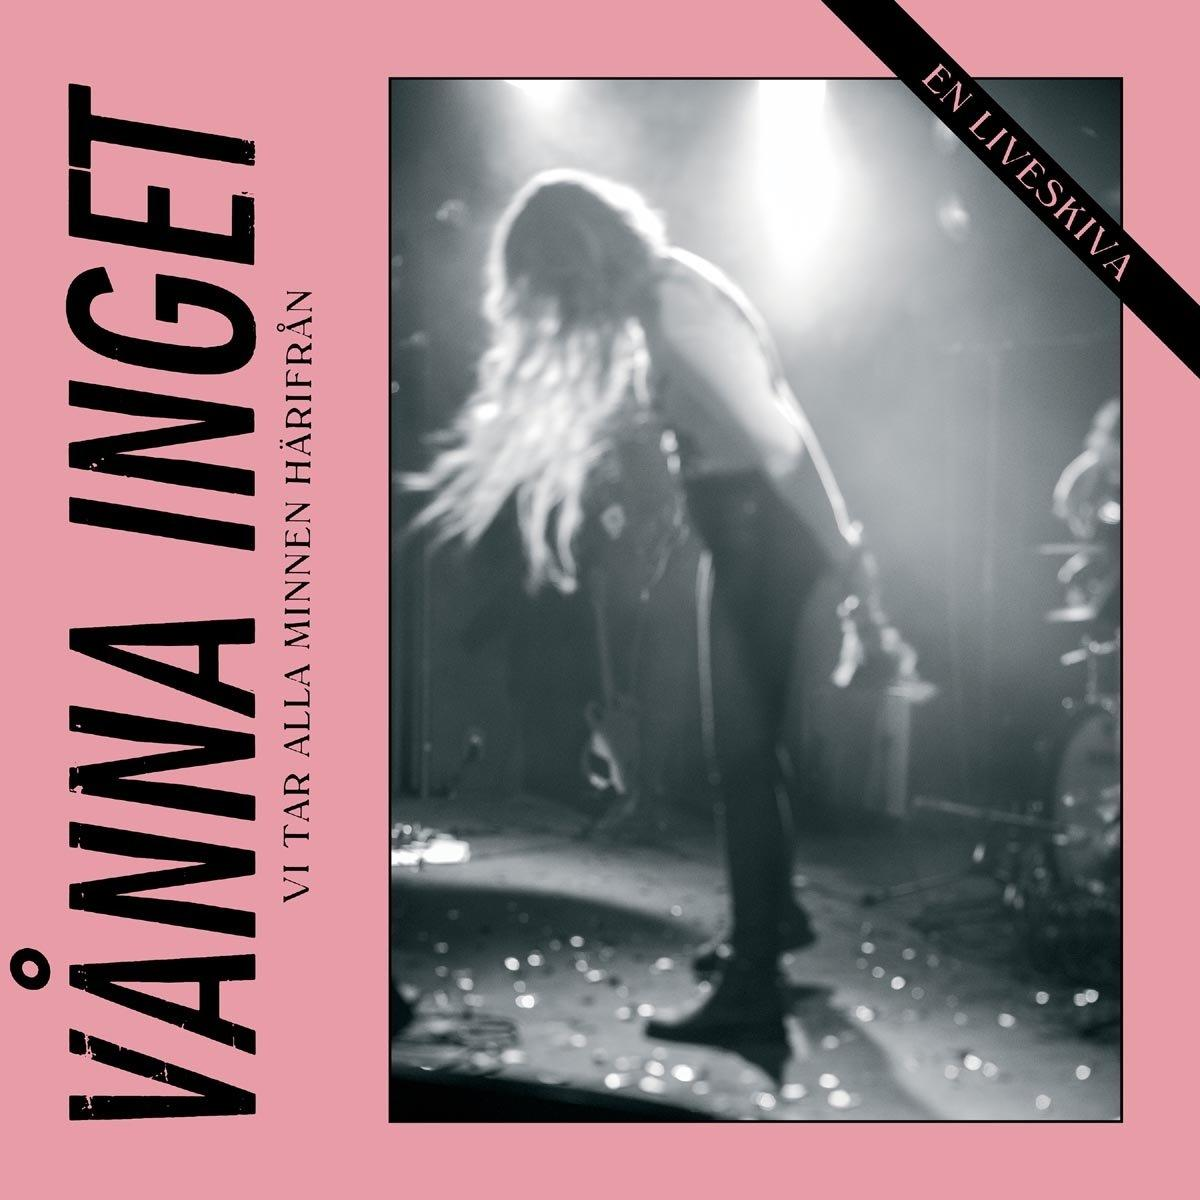 Vinyl) (White Ar Vanna - (Live) VI Härifran - Alla (Vinyl) Minnen Inget